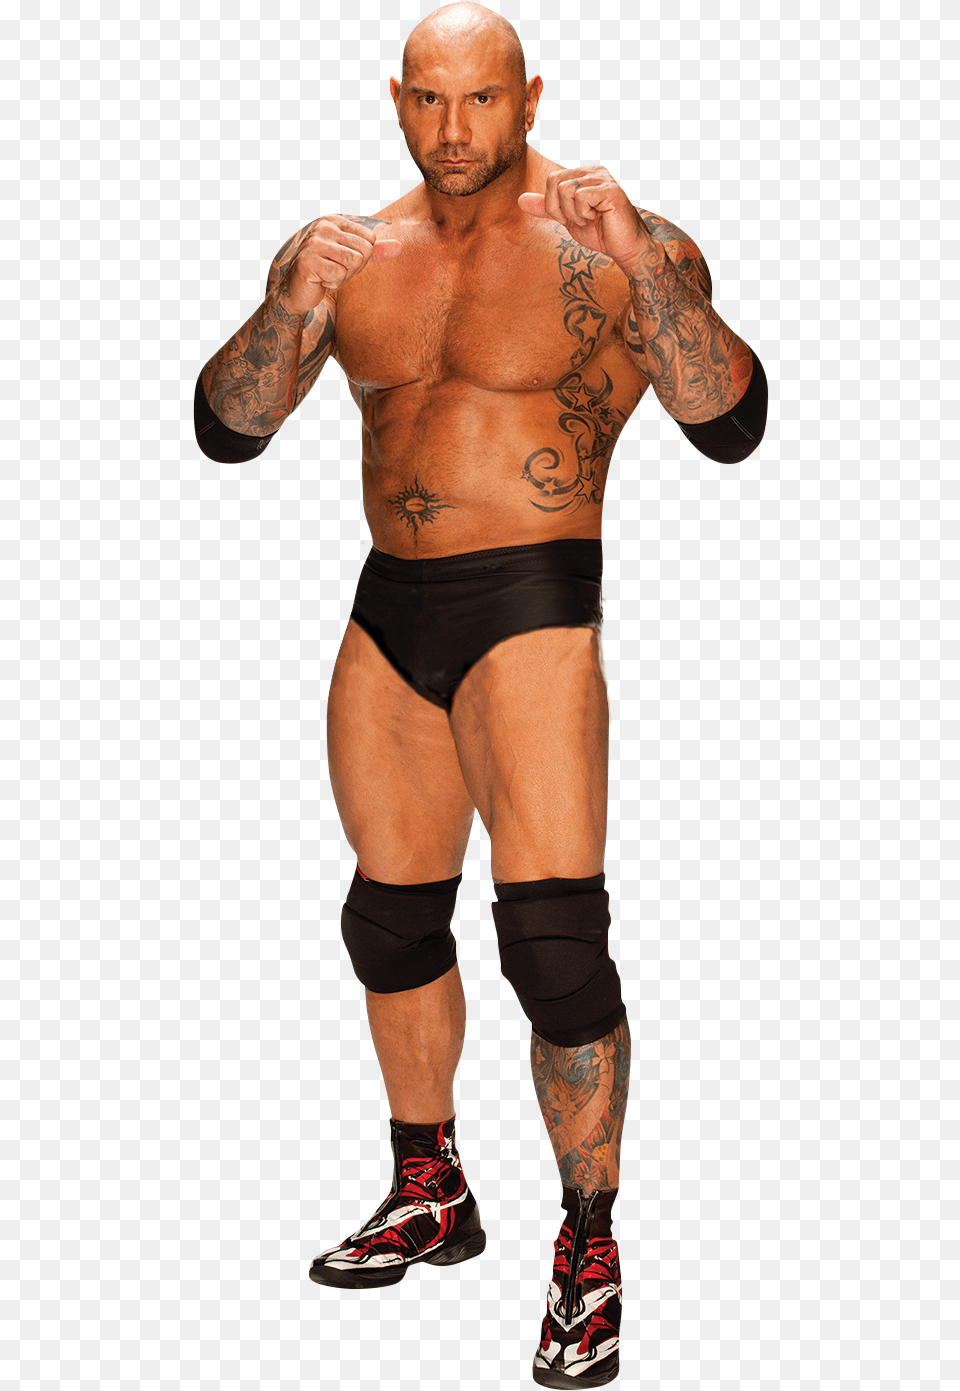 Batista Image Wwe Batista, Tattoo, Clothing, Skin, Footwear Free Png Download